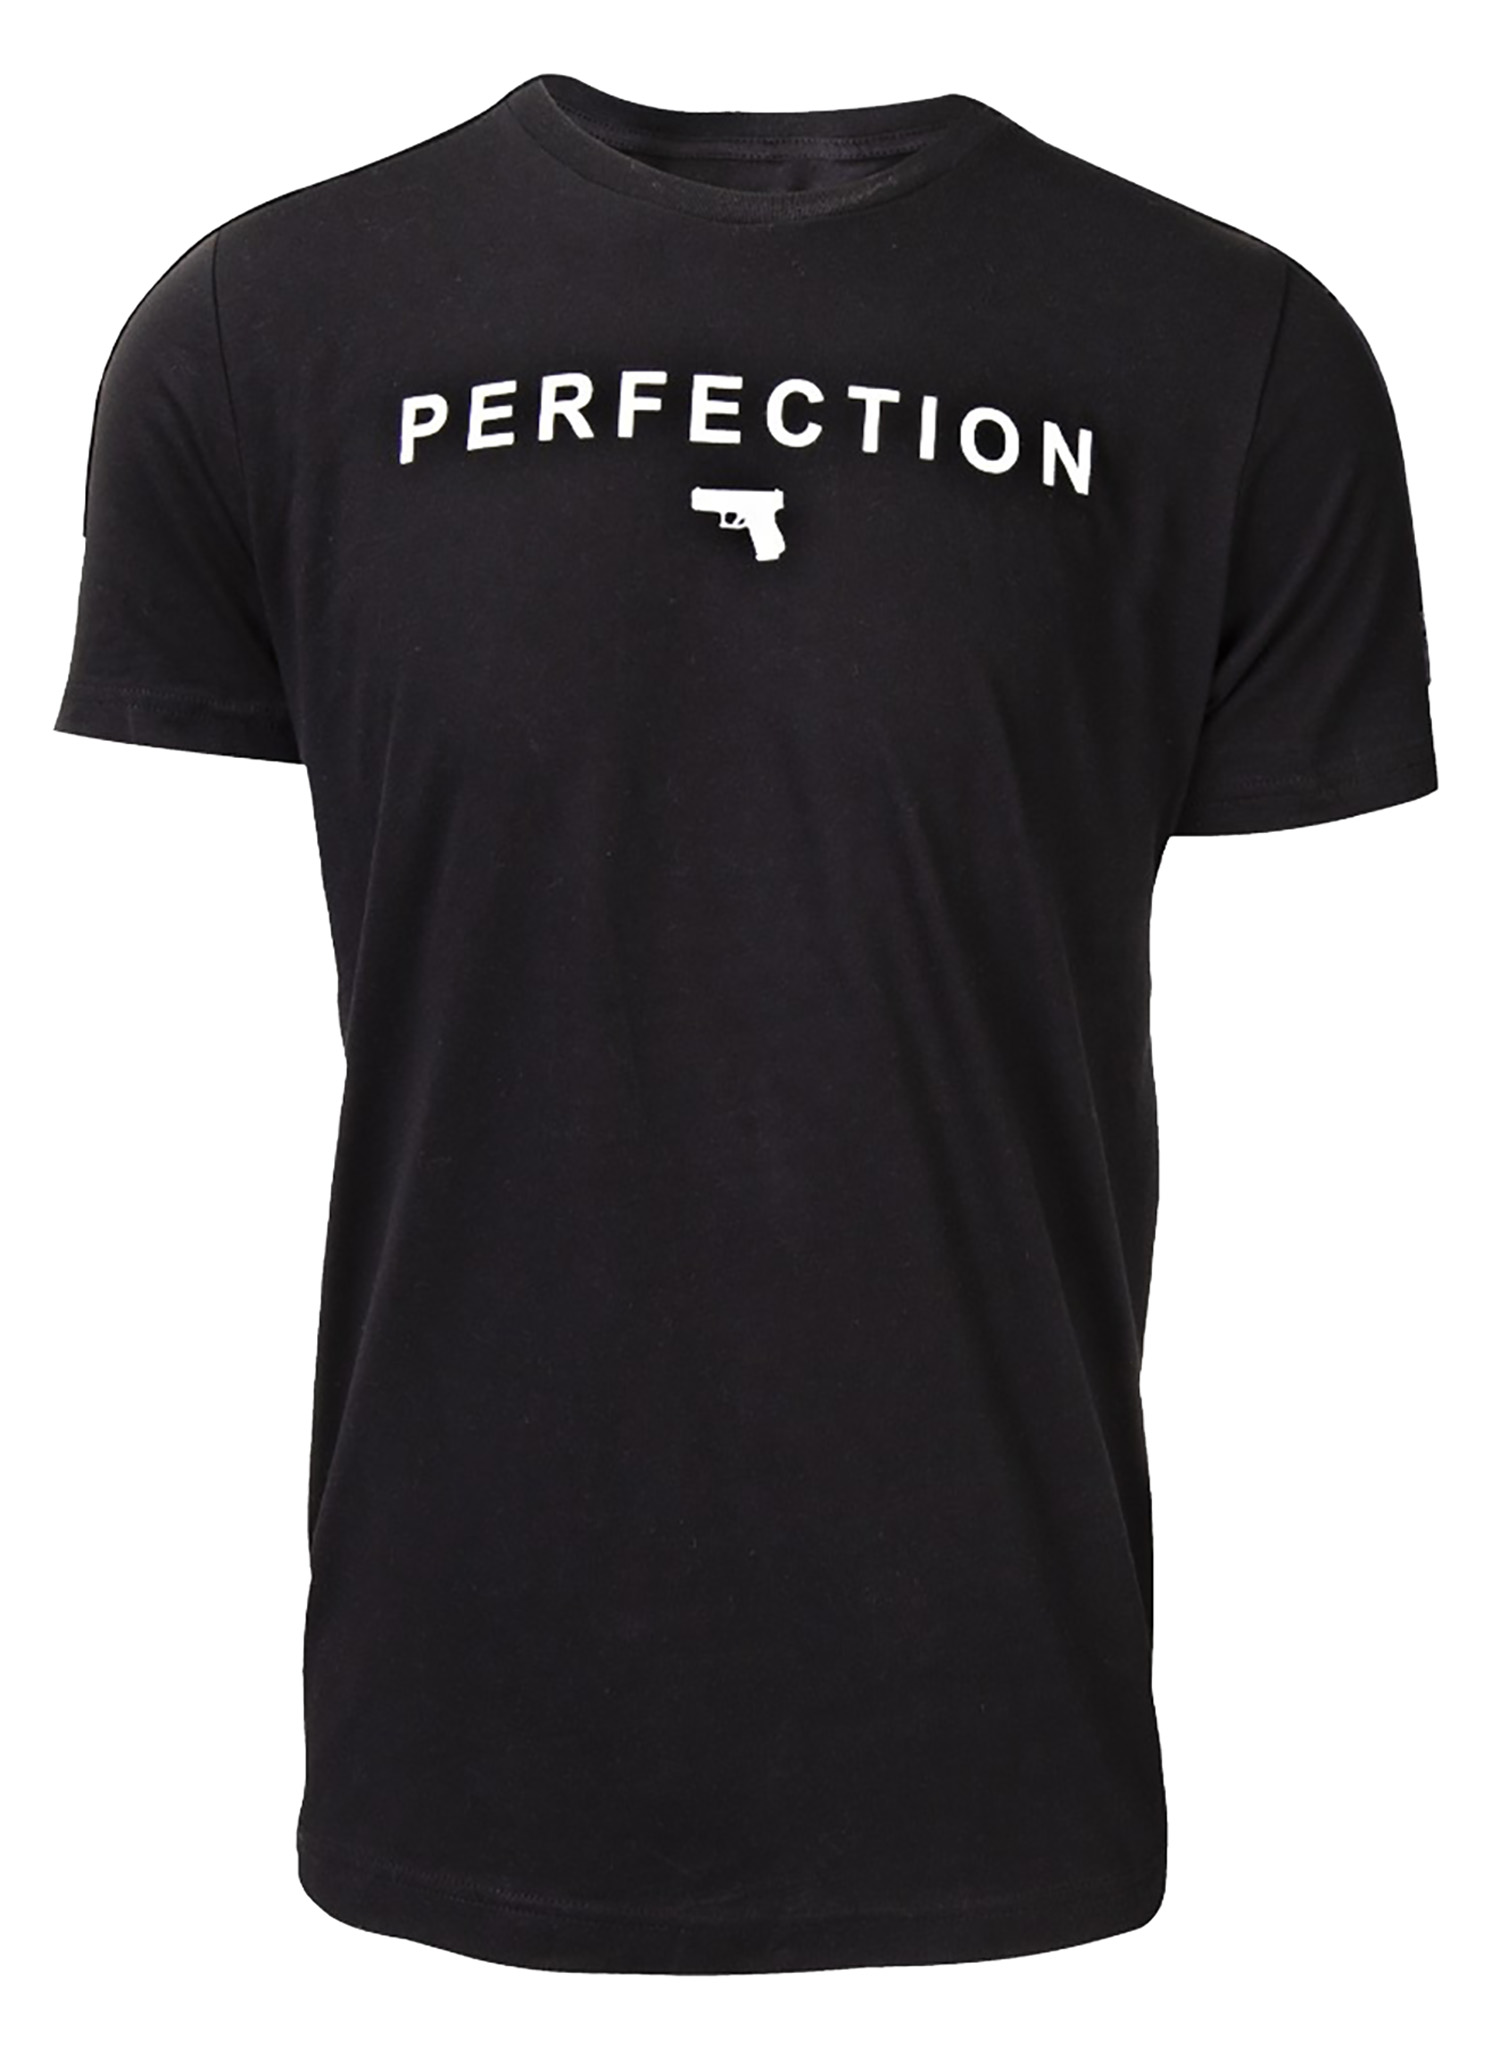 Glock AA75127 Perfection Pistol T-Shirt Black XL Short Sleeve